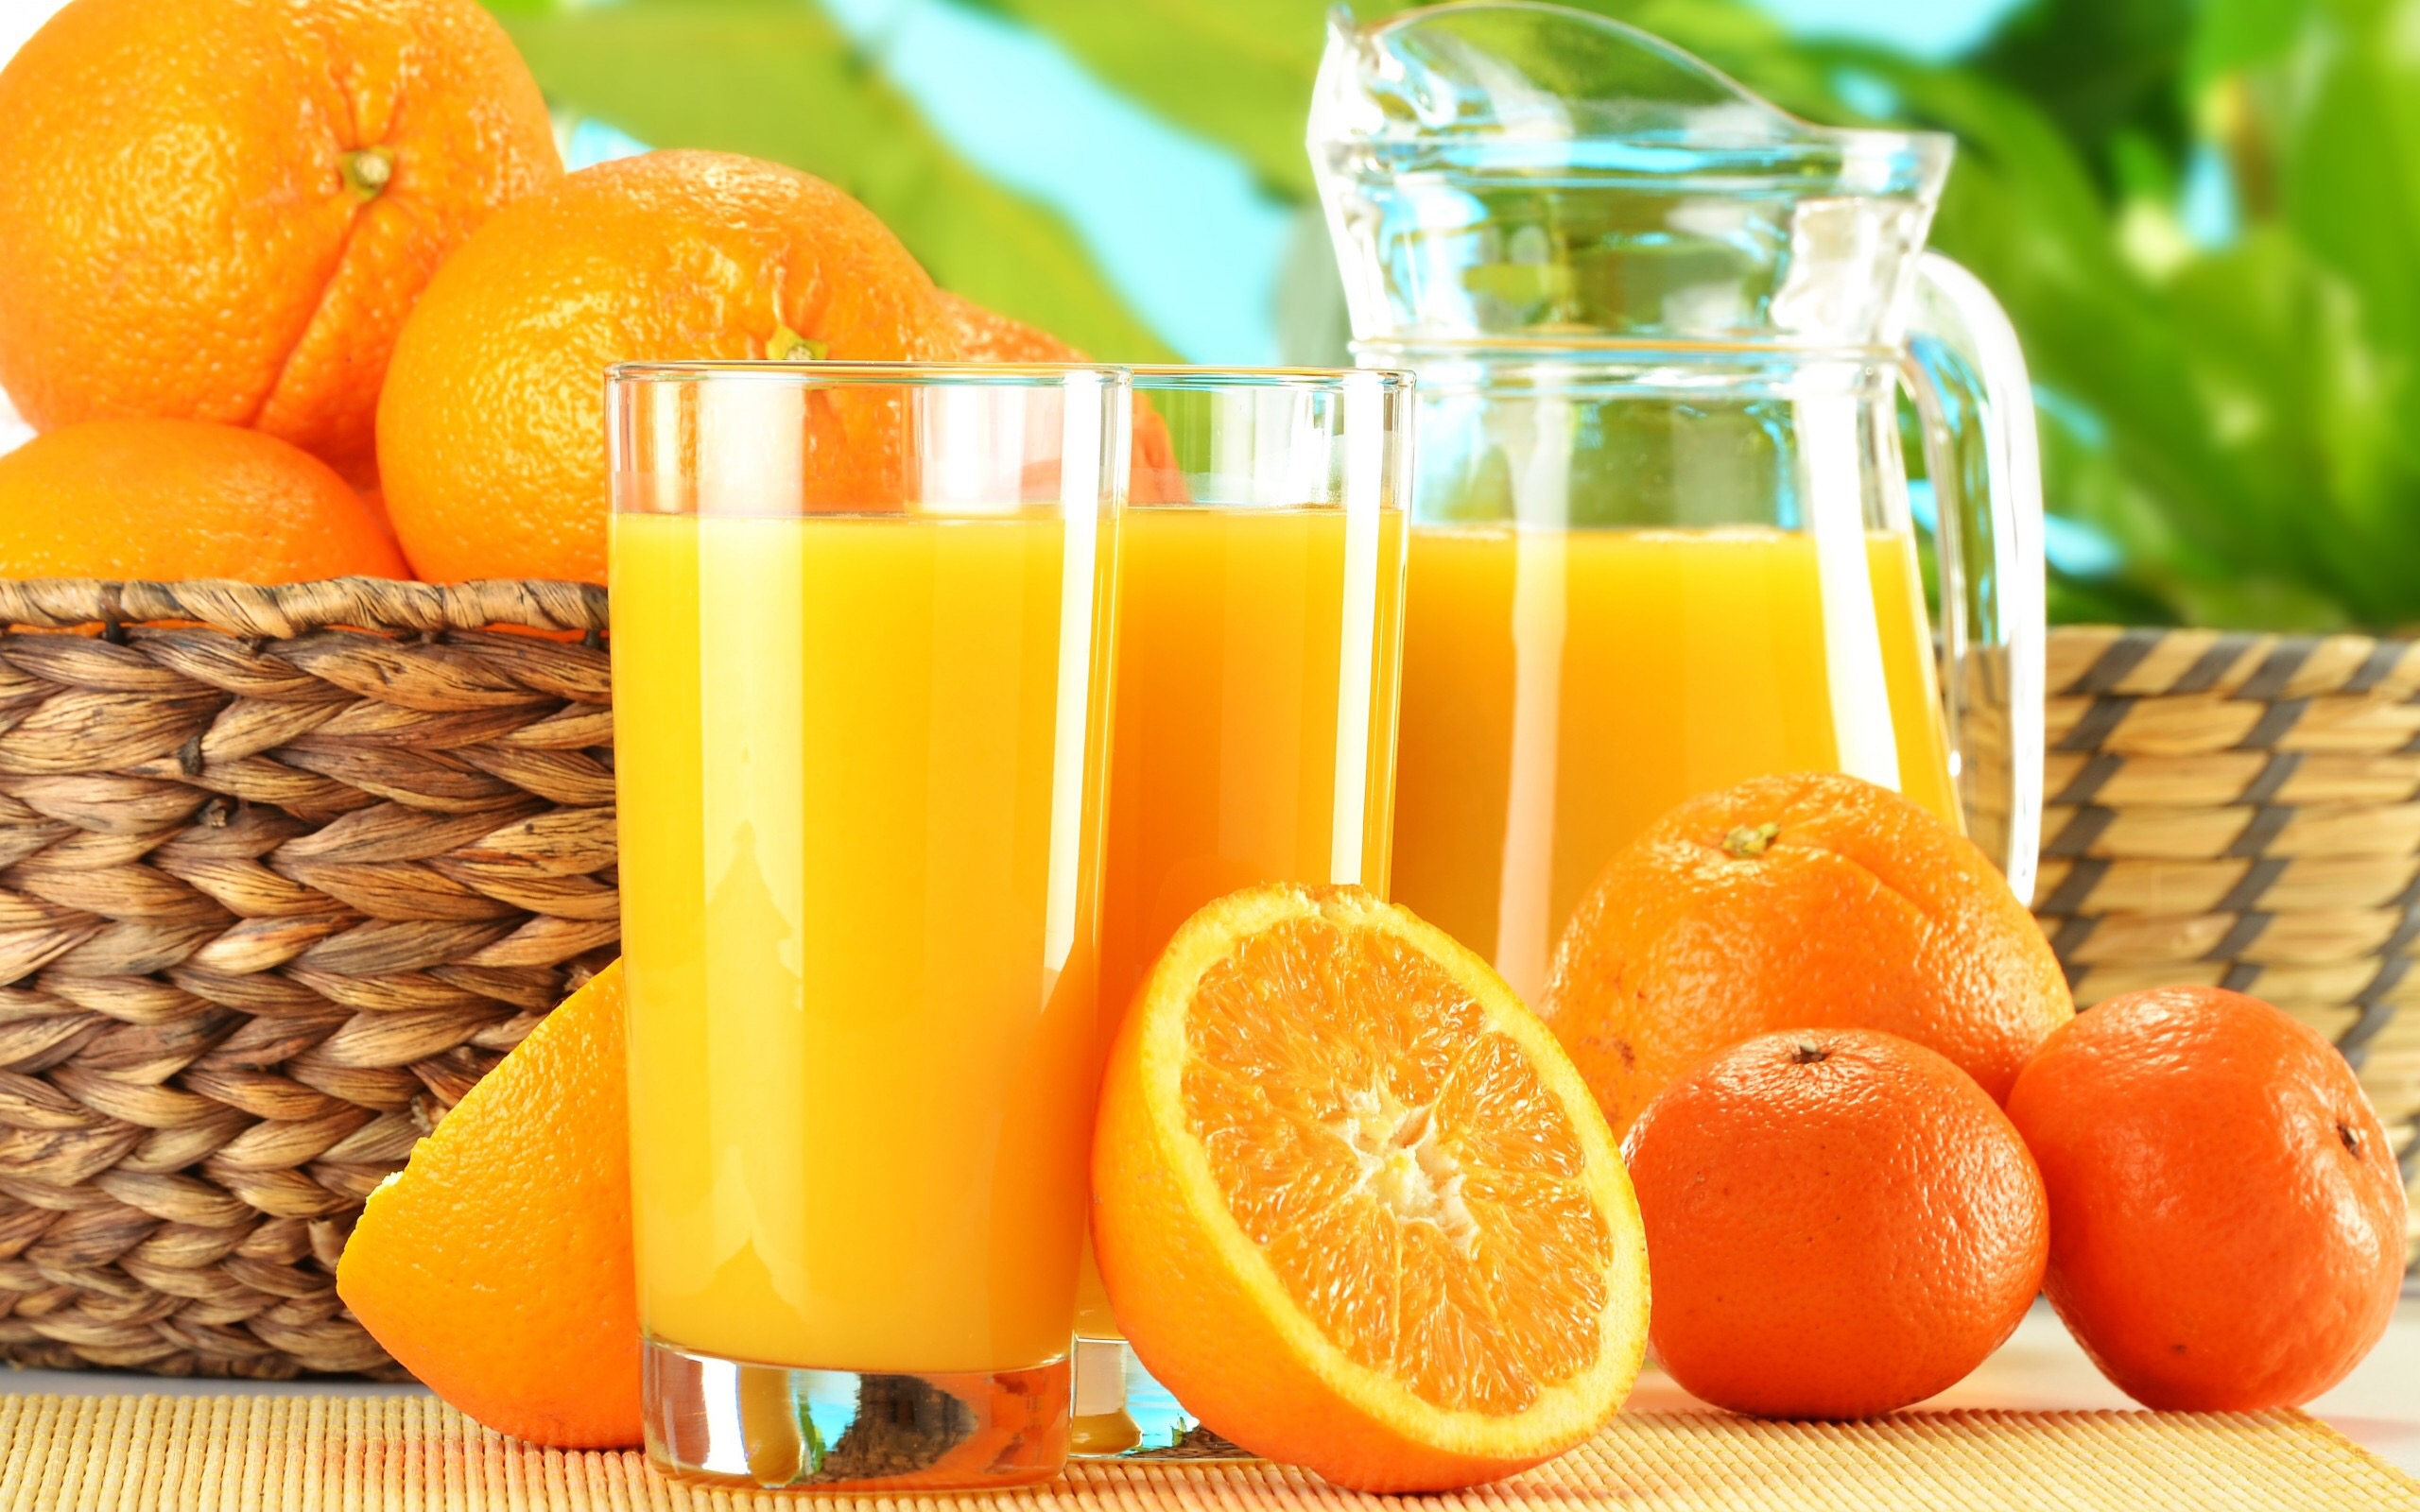 spremuta succo arancia